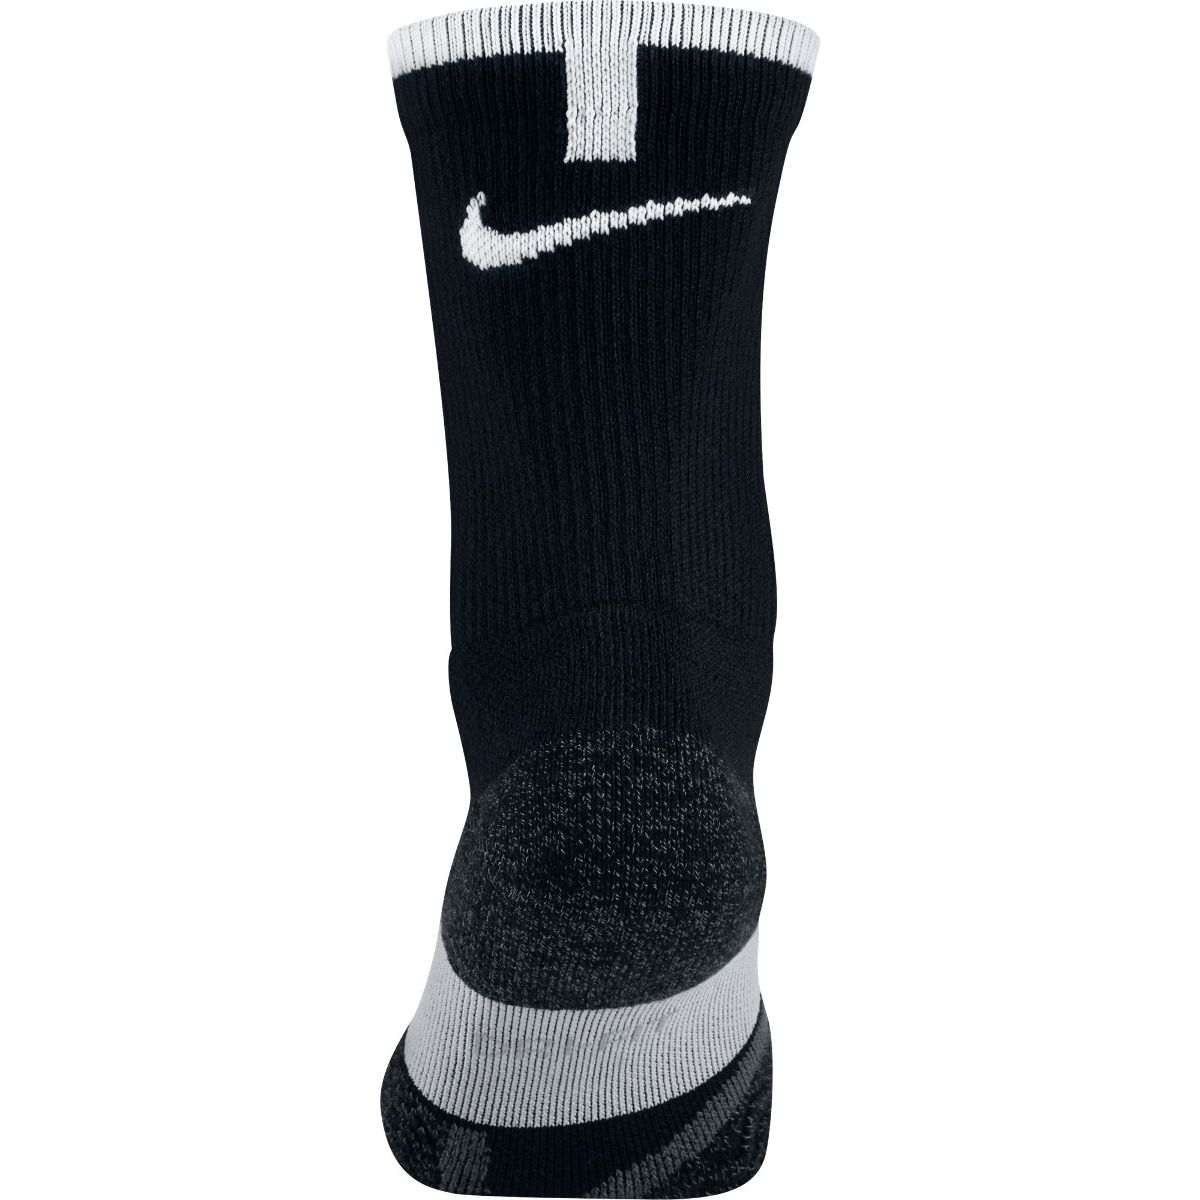 Nike Elite Crew Tennis Socks SX4935-011